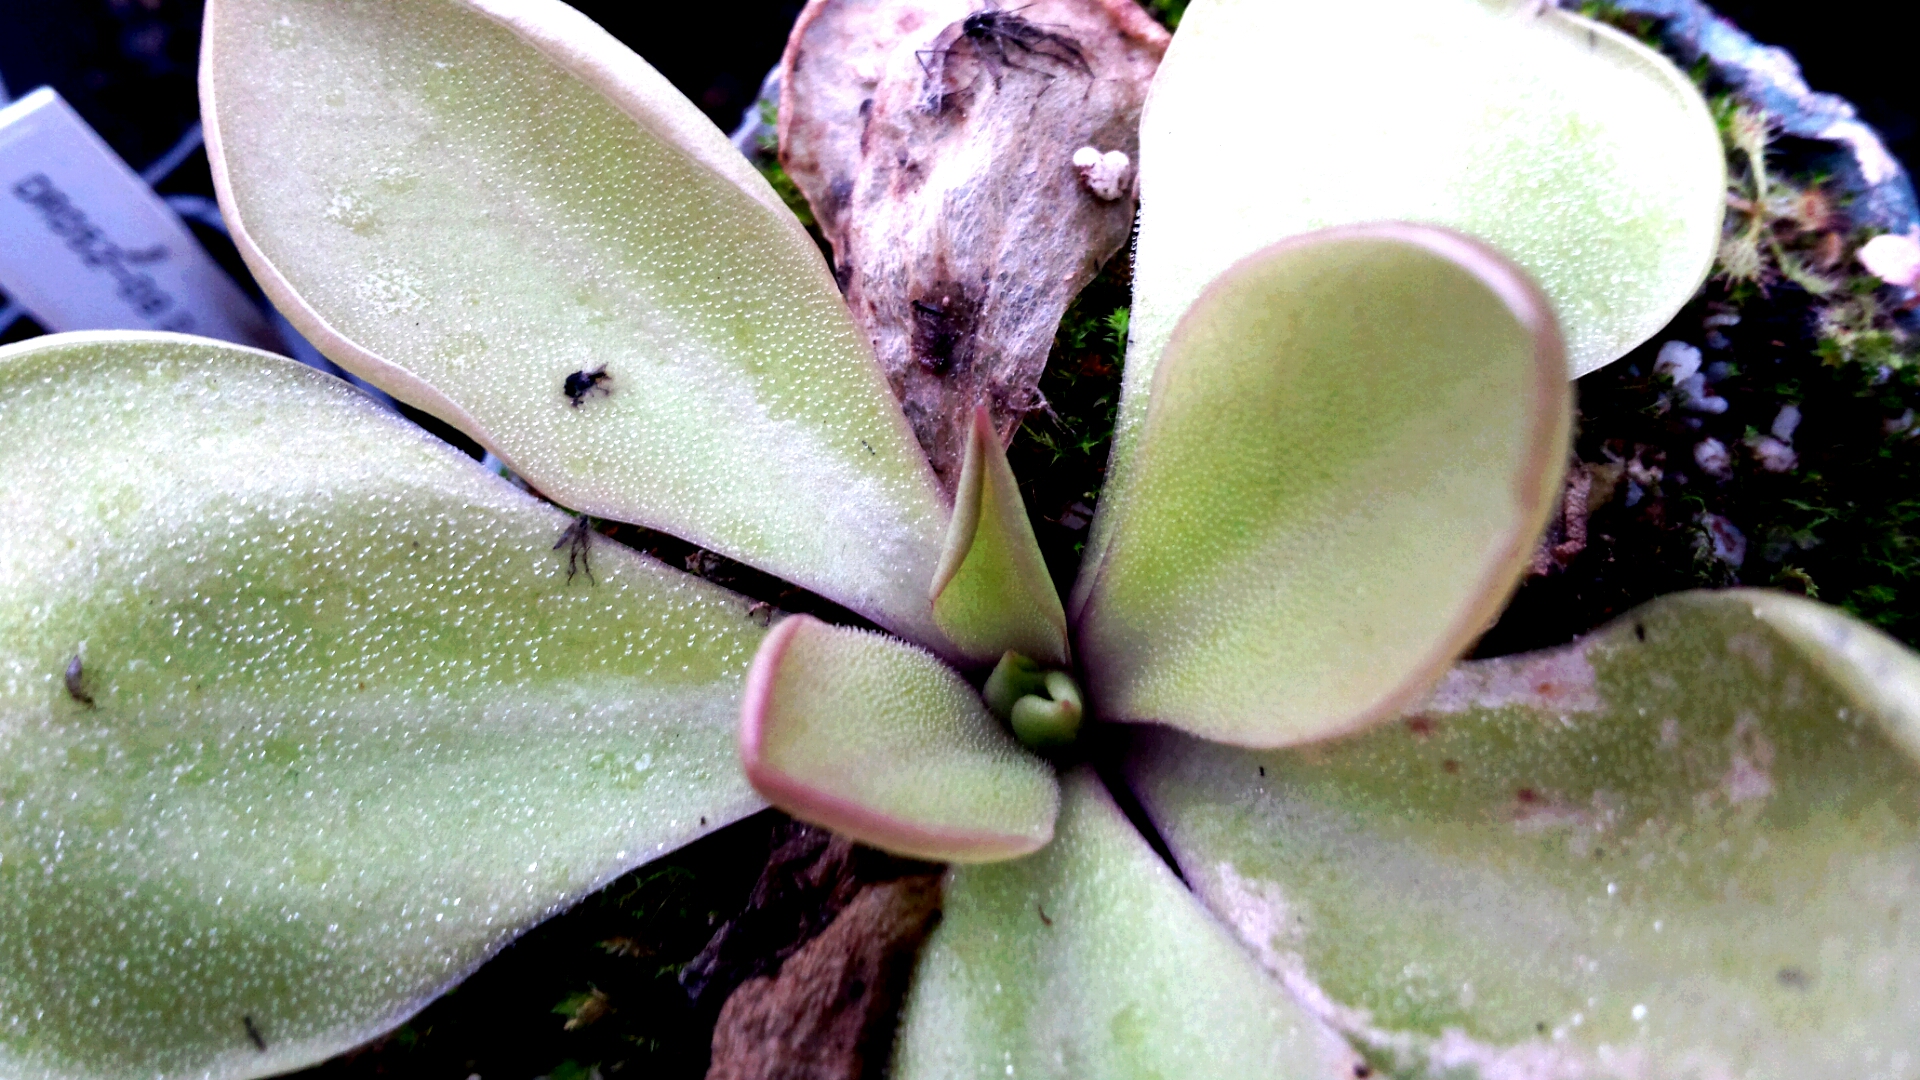 Pinguicula rectifolia